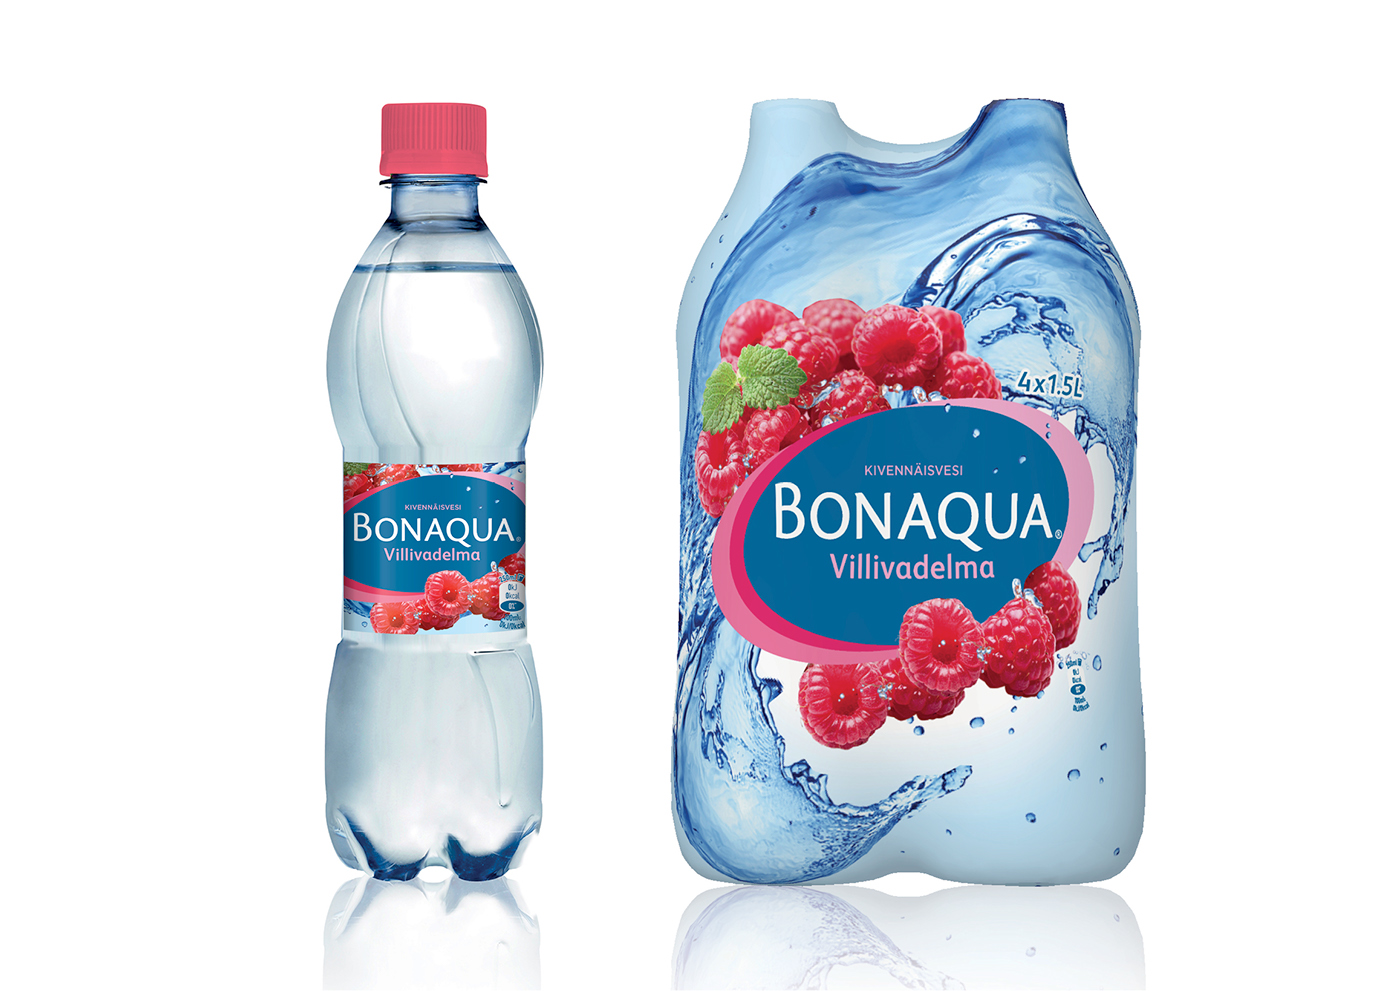 https://www.google.dk/search?client=safari&rls=en&q=packaging+design&ie=UTF-8&oe=UTF-8&gws_rd=cr&ei=VYPqV8PrBOXNgAaMkIeIAw packaging design water bottle Liquid